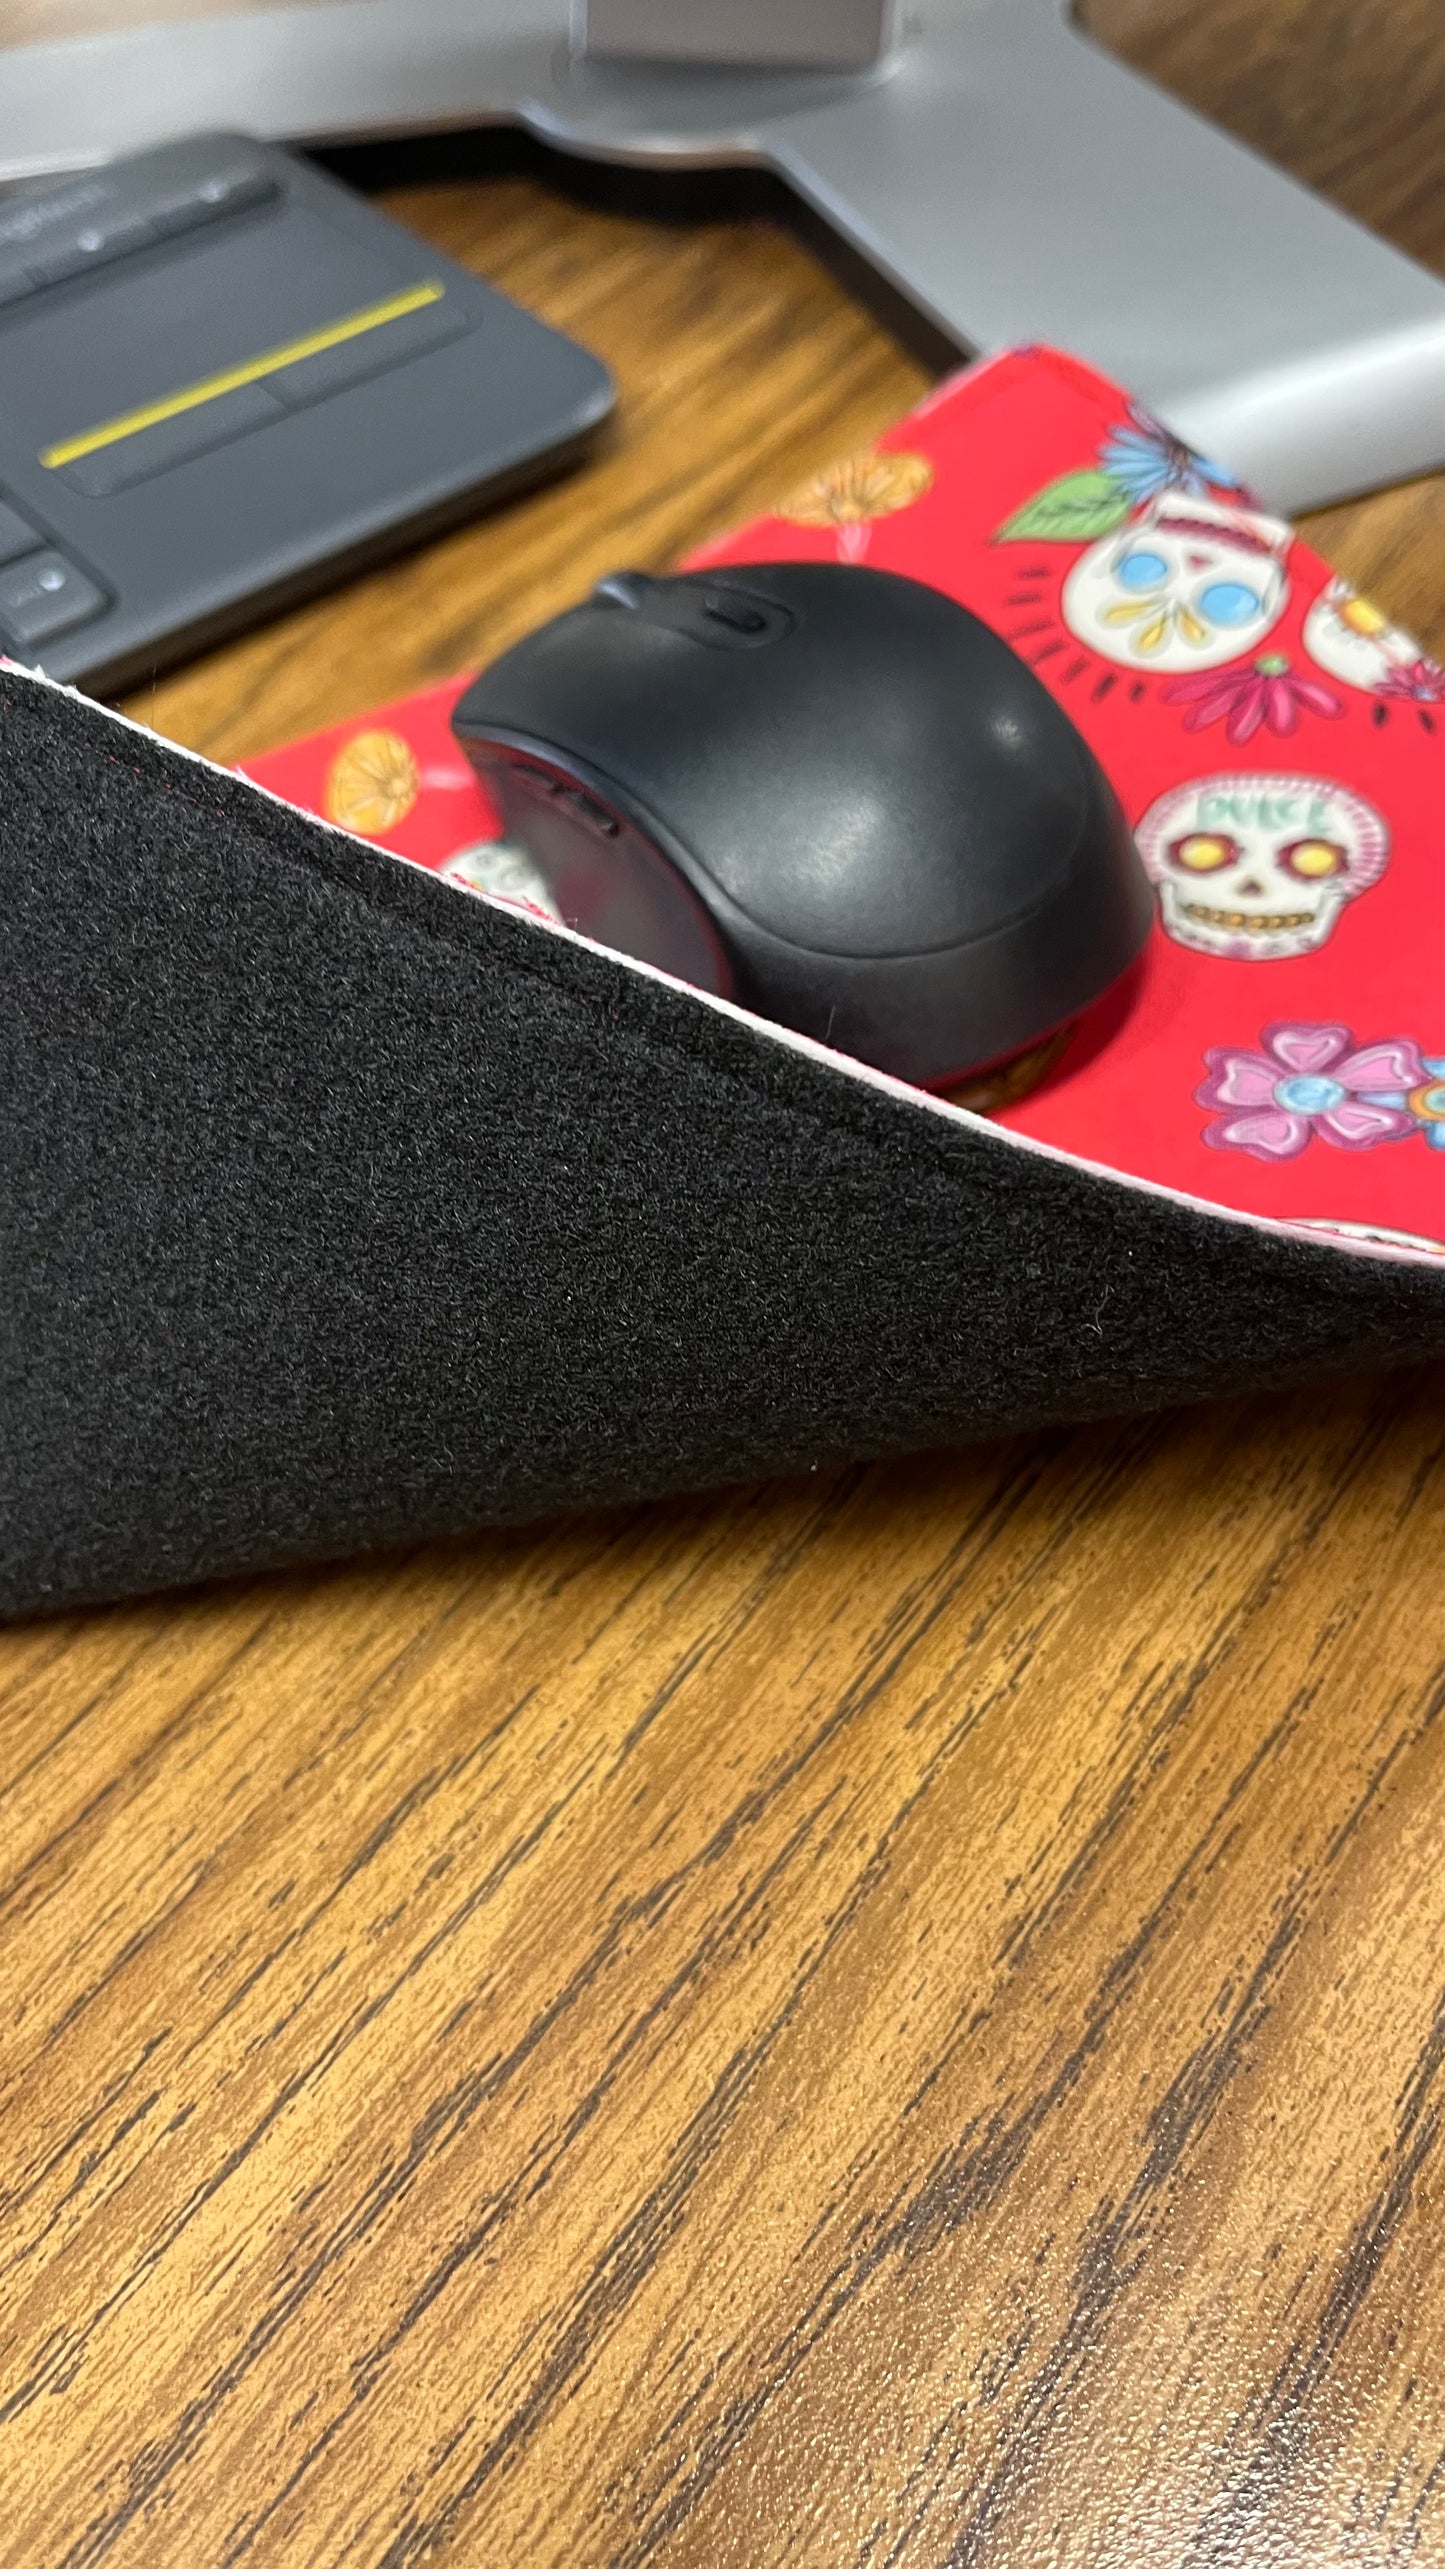 Soft Red Calaveritas Mouse Pad